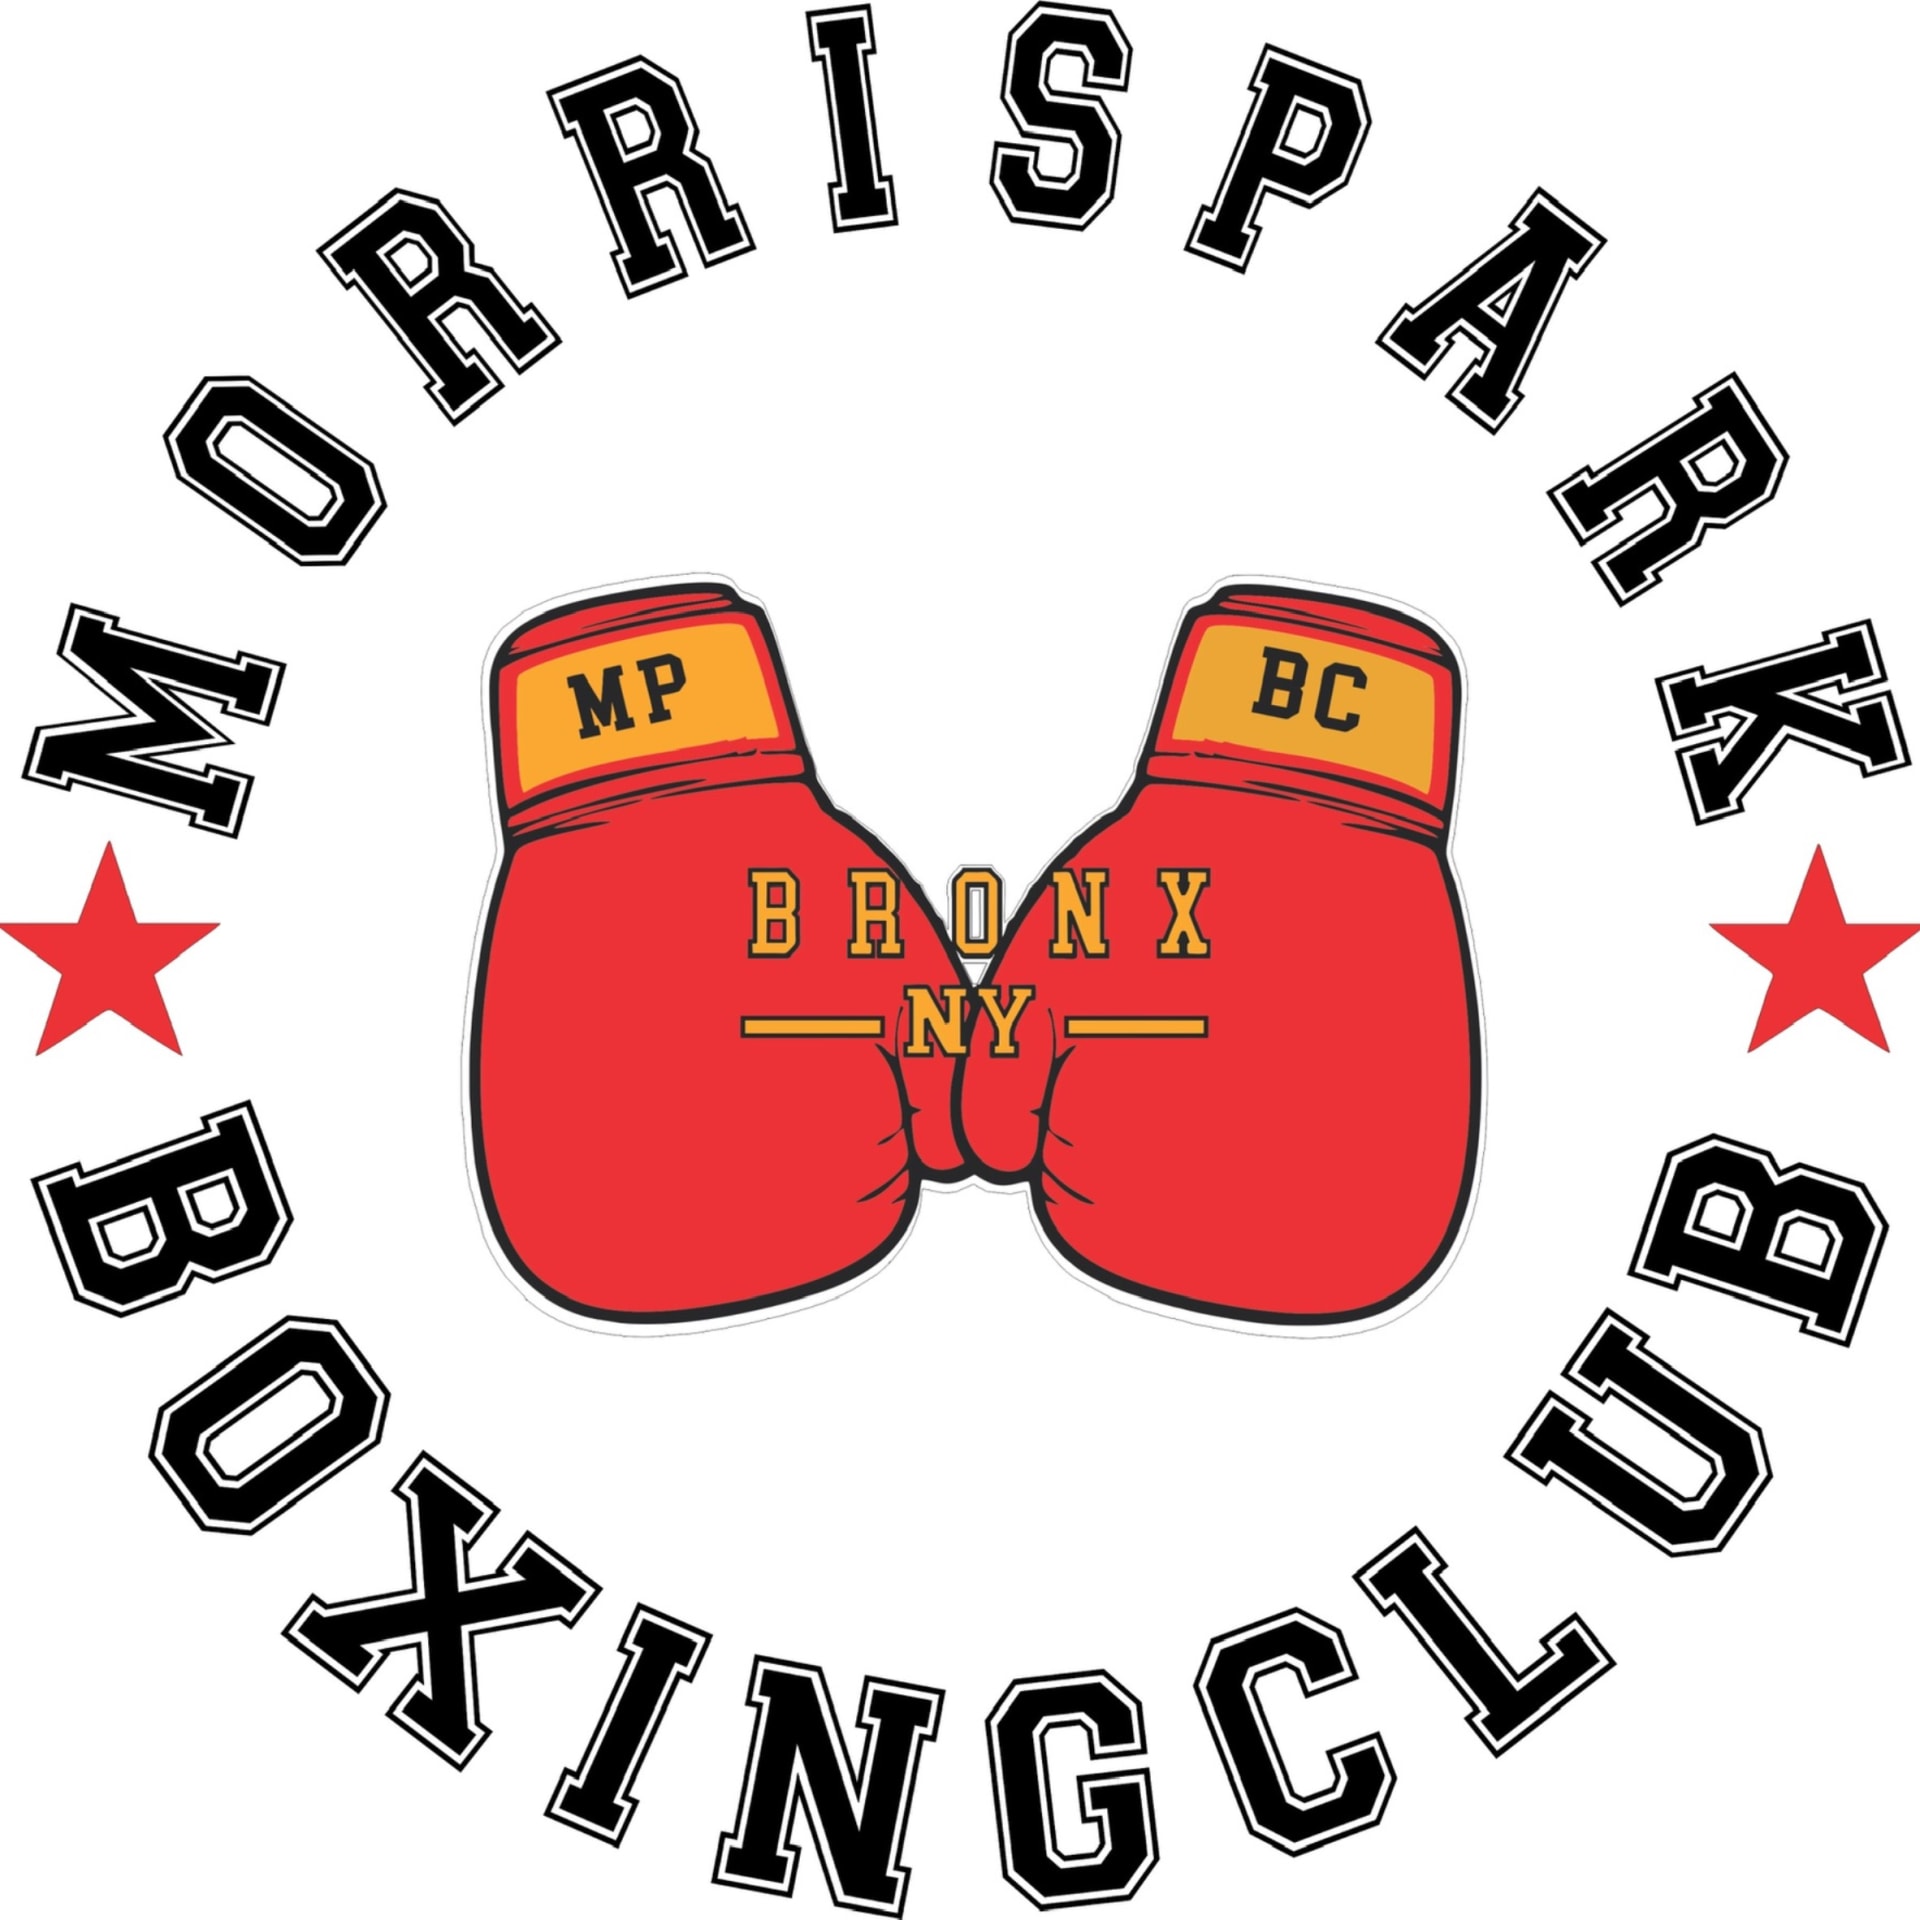 Morris Park Boxing Club